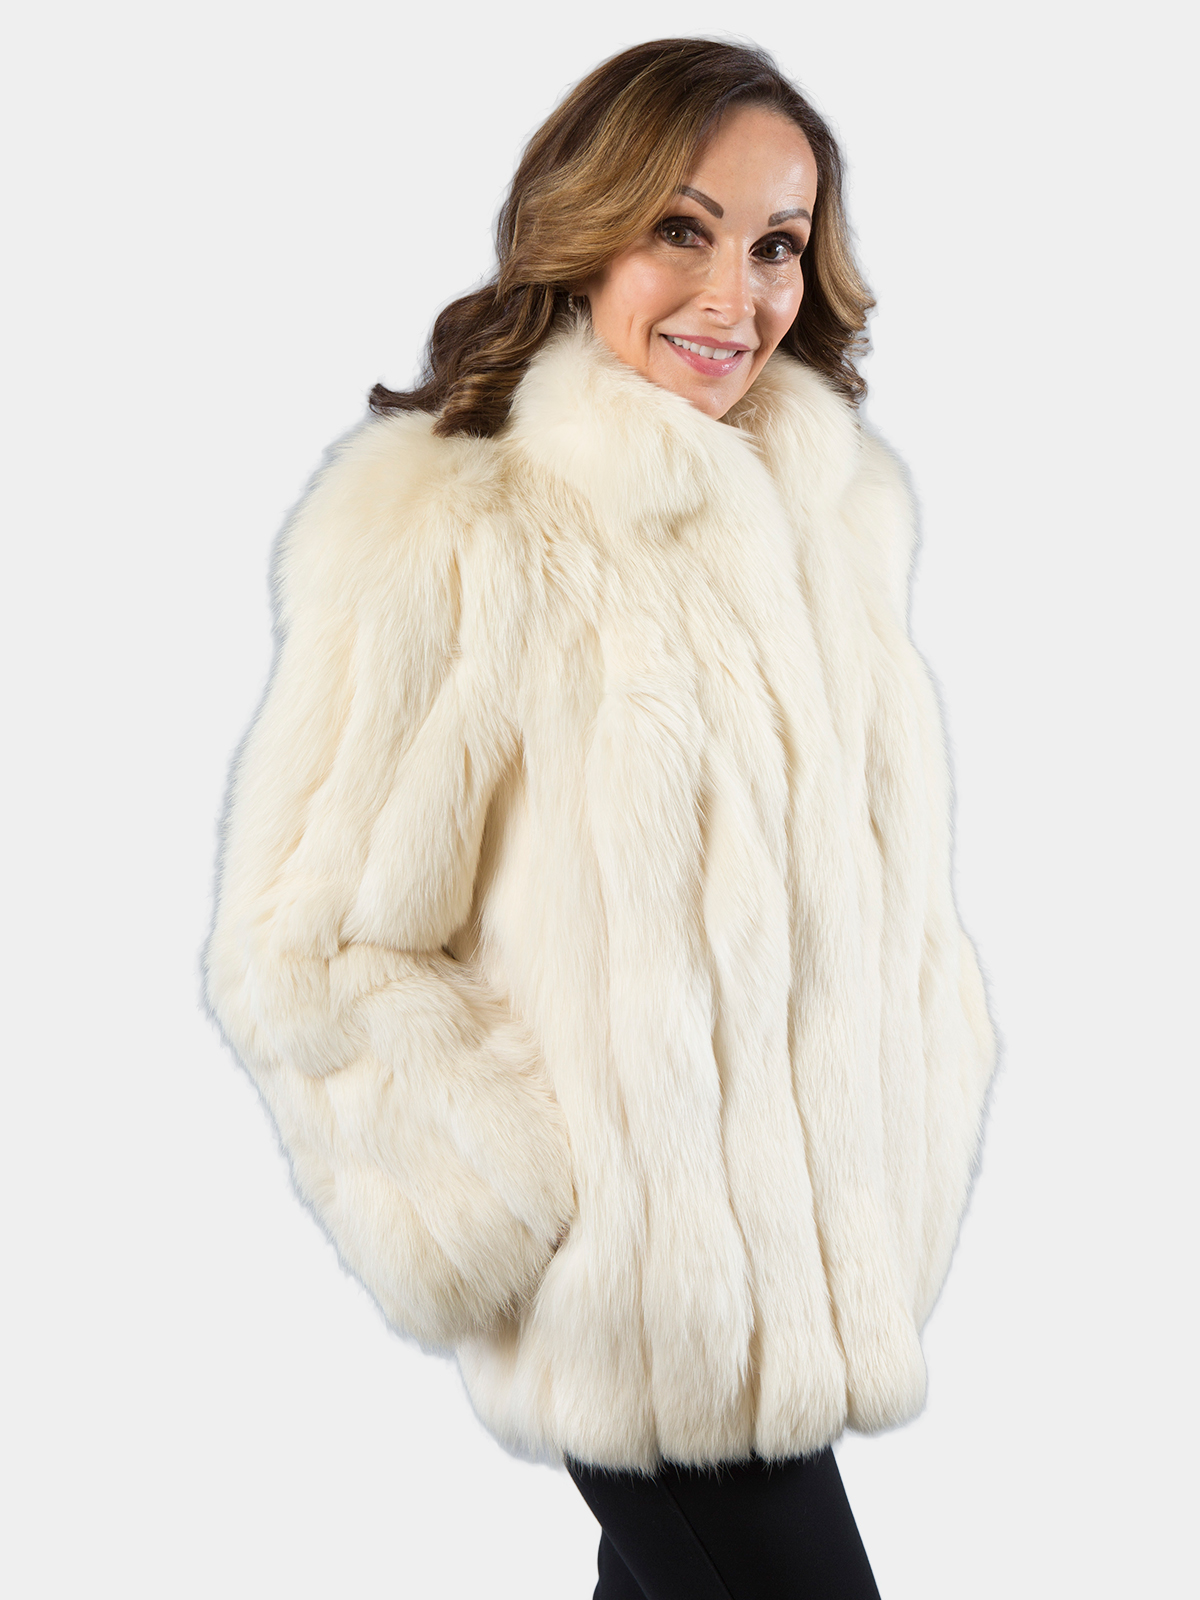 Shadow Fox Fur Jacket (Women's Small) - Estate Furs